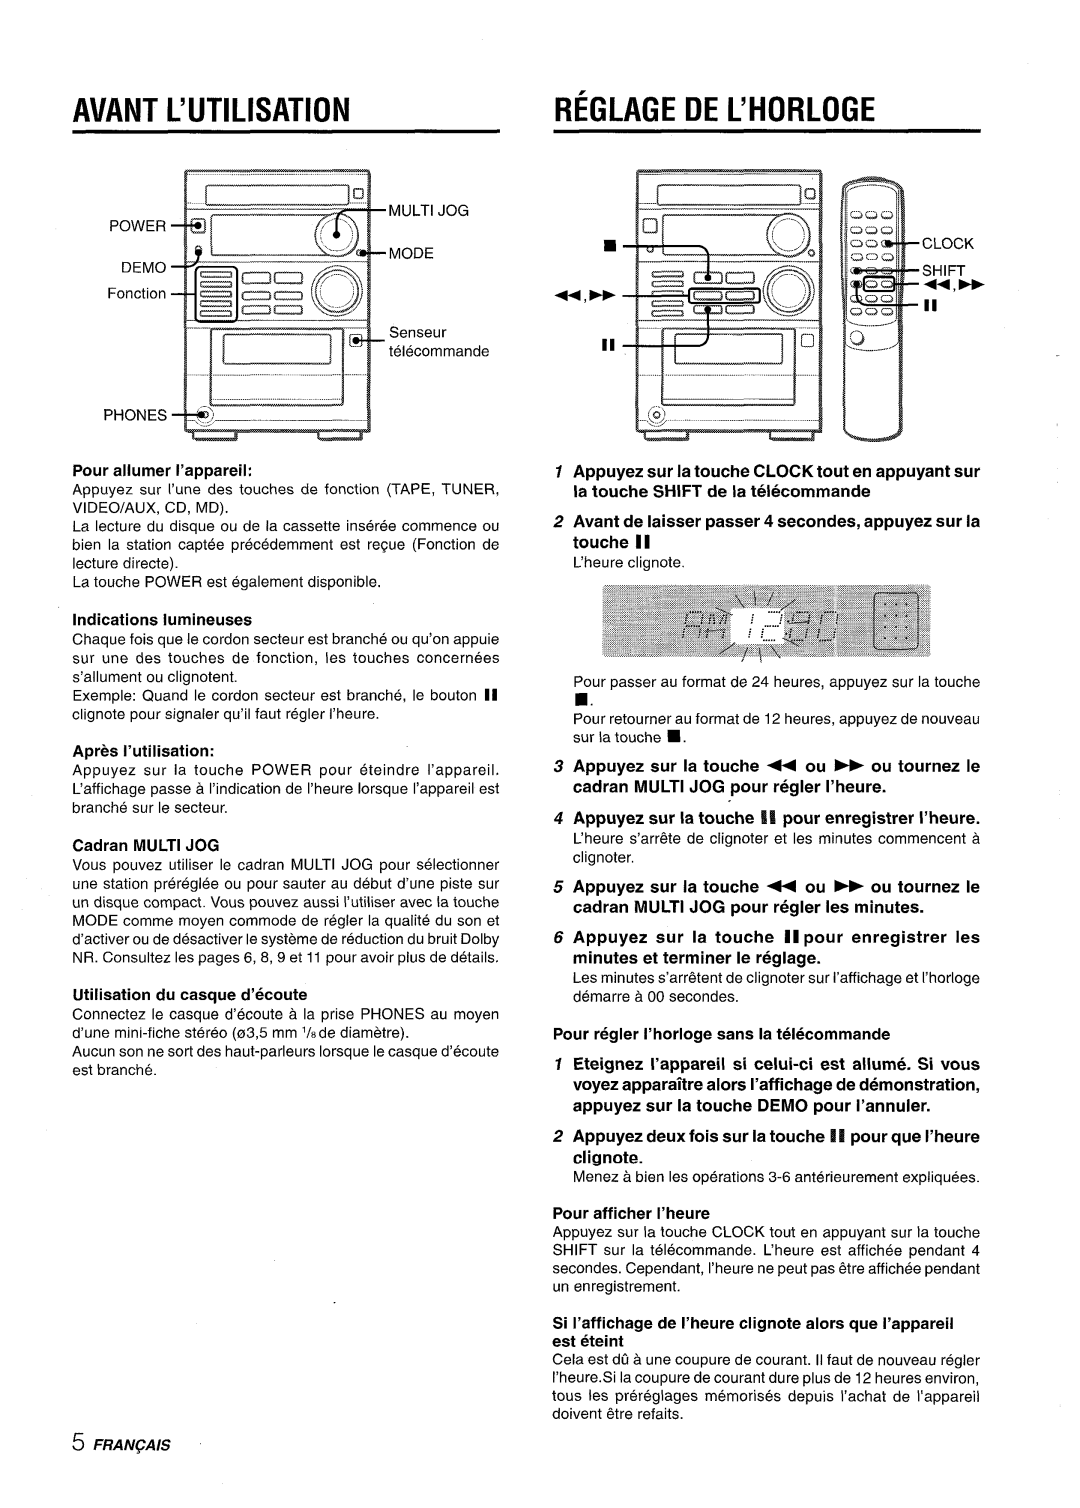 Aiwa XR-M35 Avant L’Utilisation, Reglage De L’Horloge, Pour aliumer I’appareil, Indications Iumineuses, Cadran MULTI JOG 